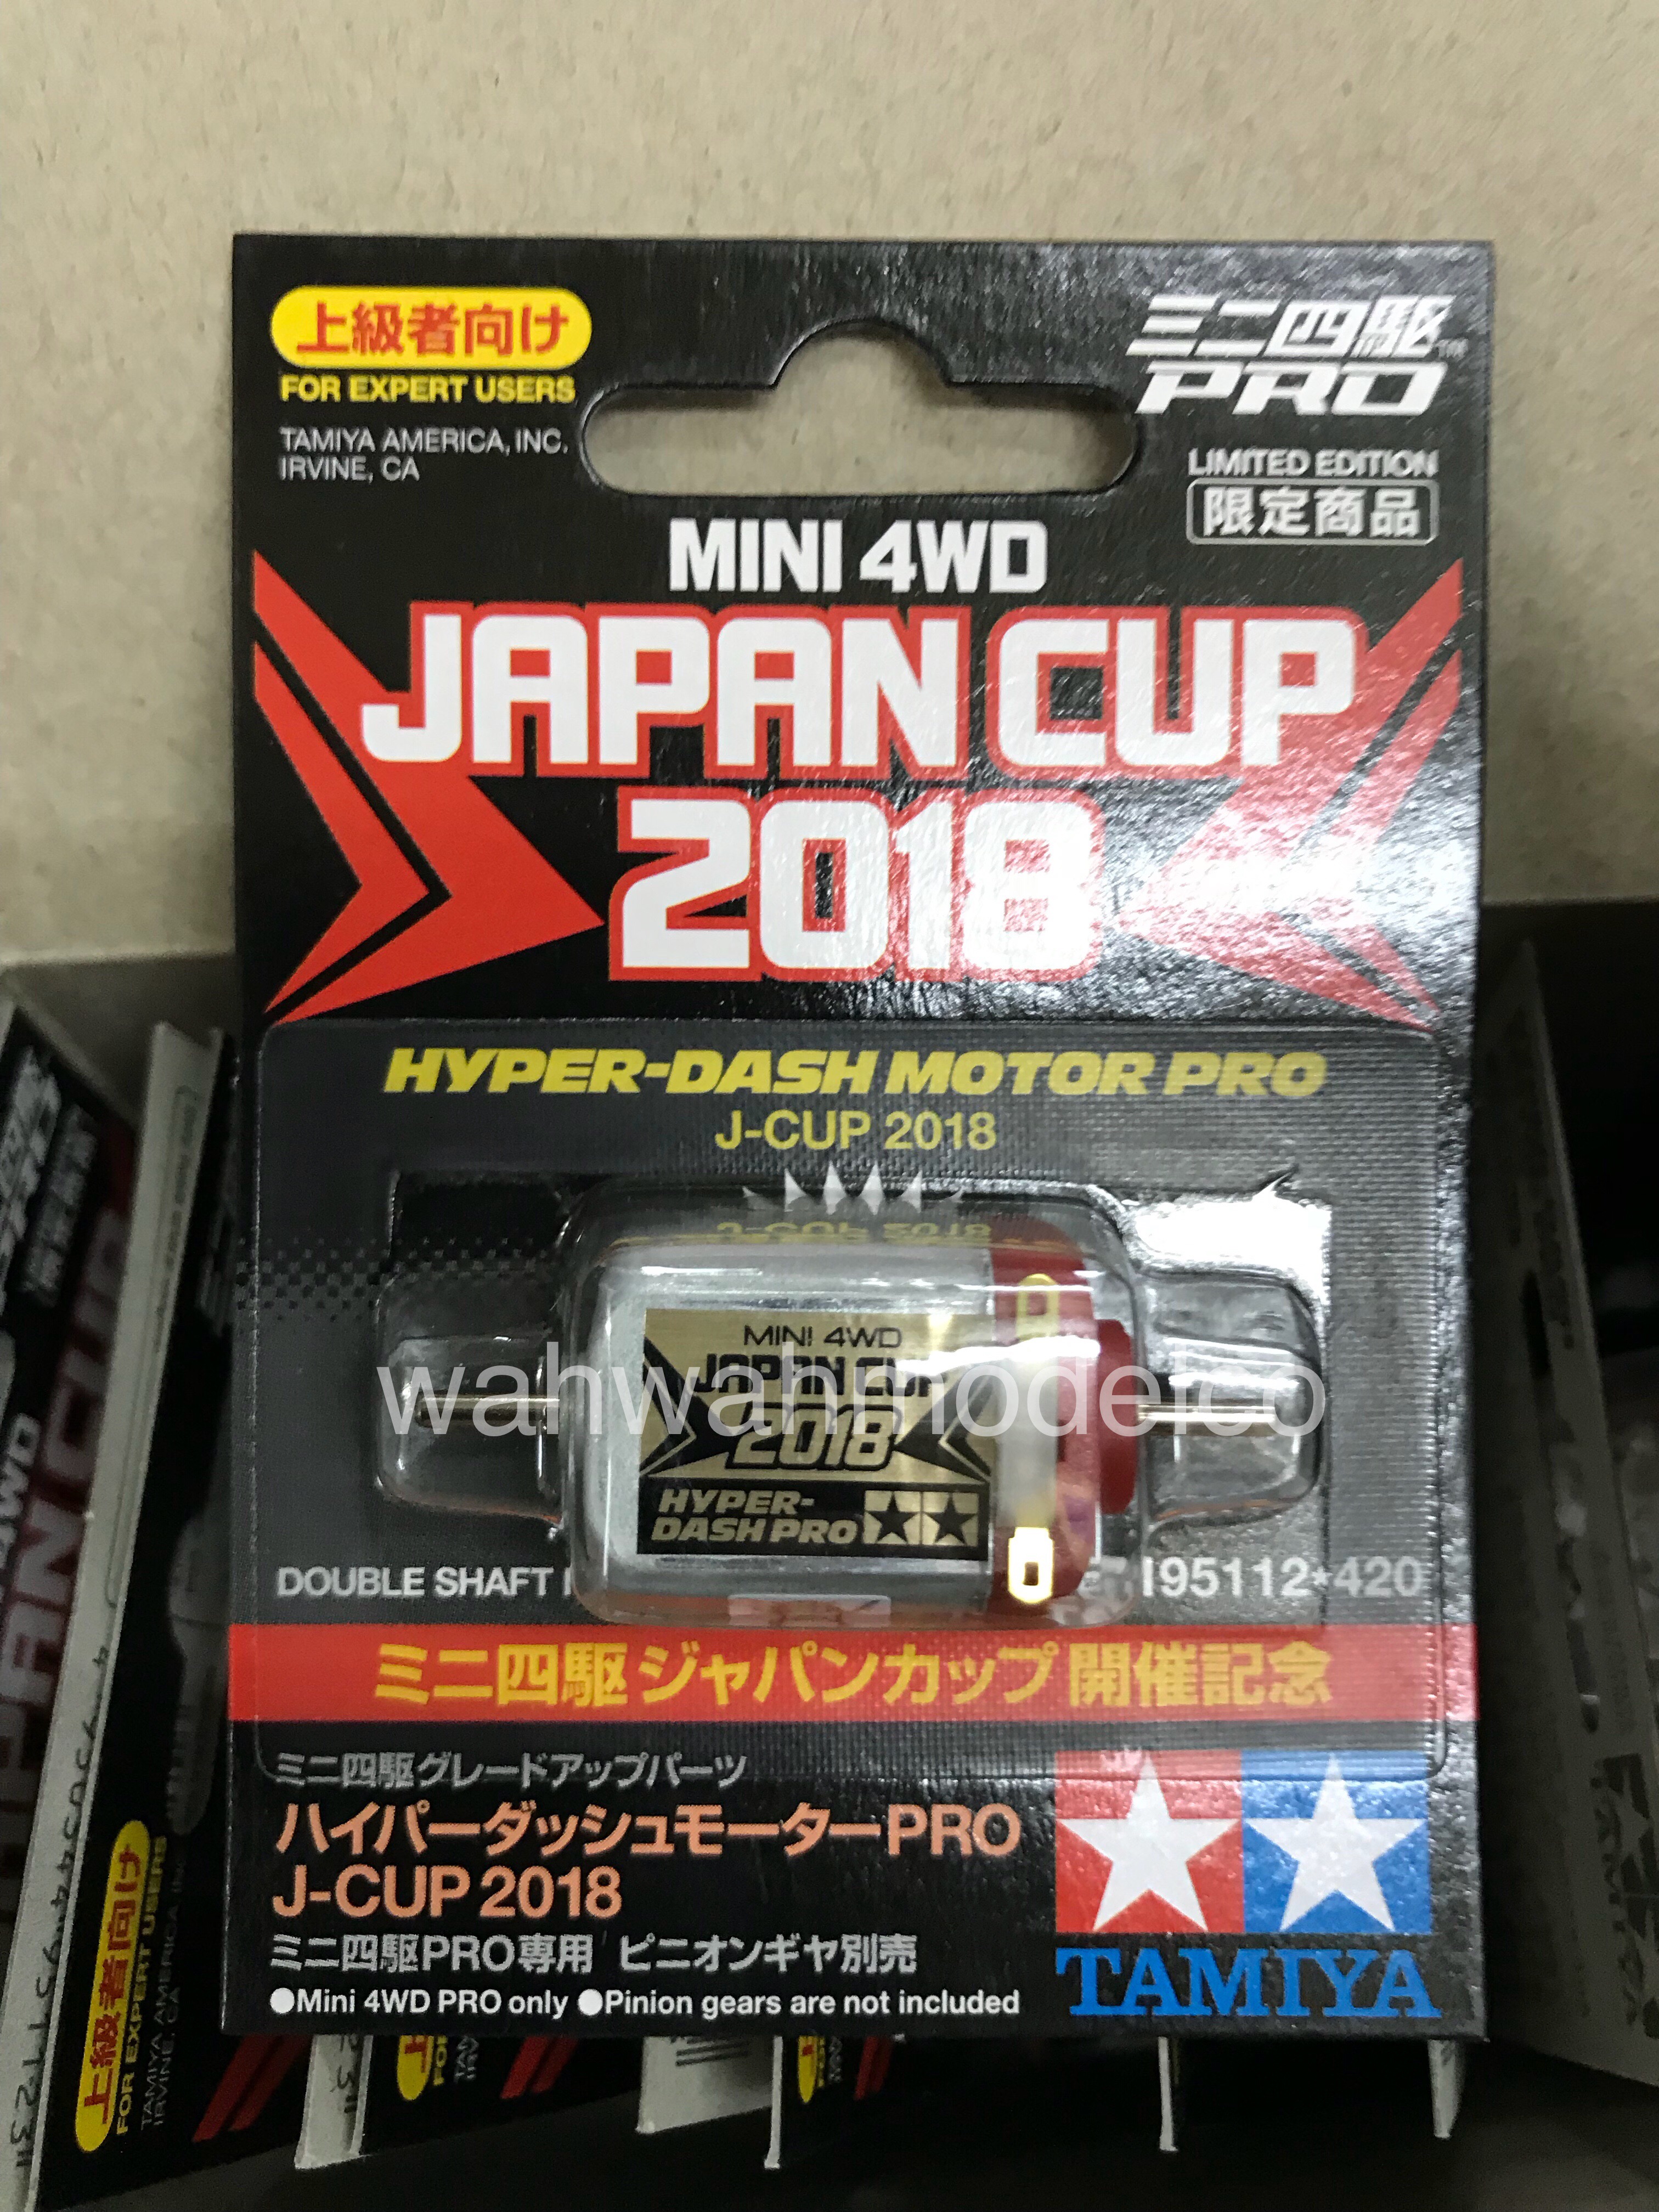 TAMIYA 95119 MINI 4WD MOTORE HYPER DASH PRO JAPAN CUP MOTOR 2019 